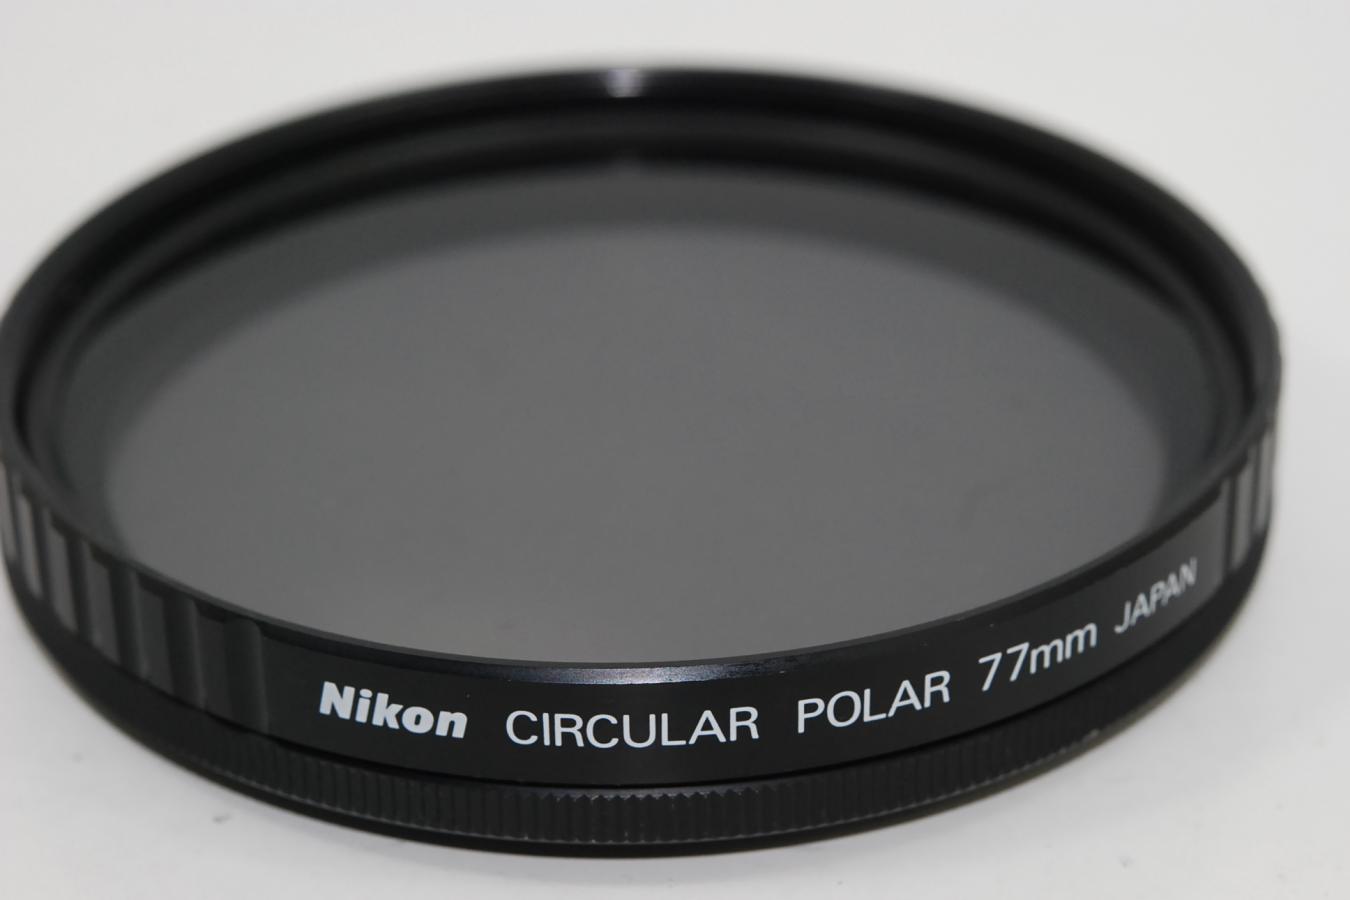 Nikon CIRCULAR POLAR 77mm